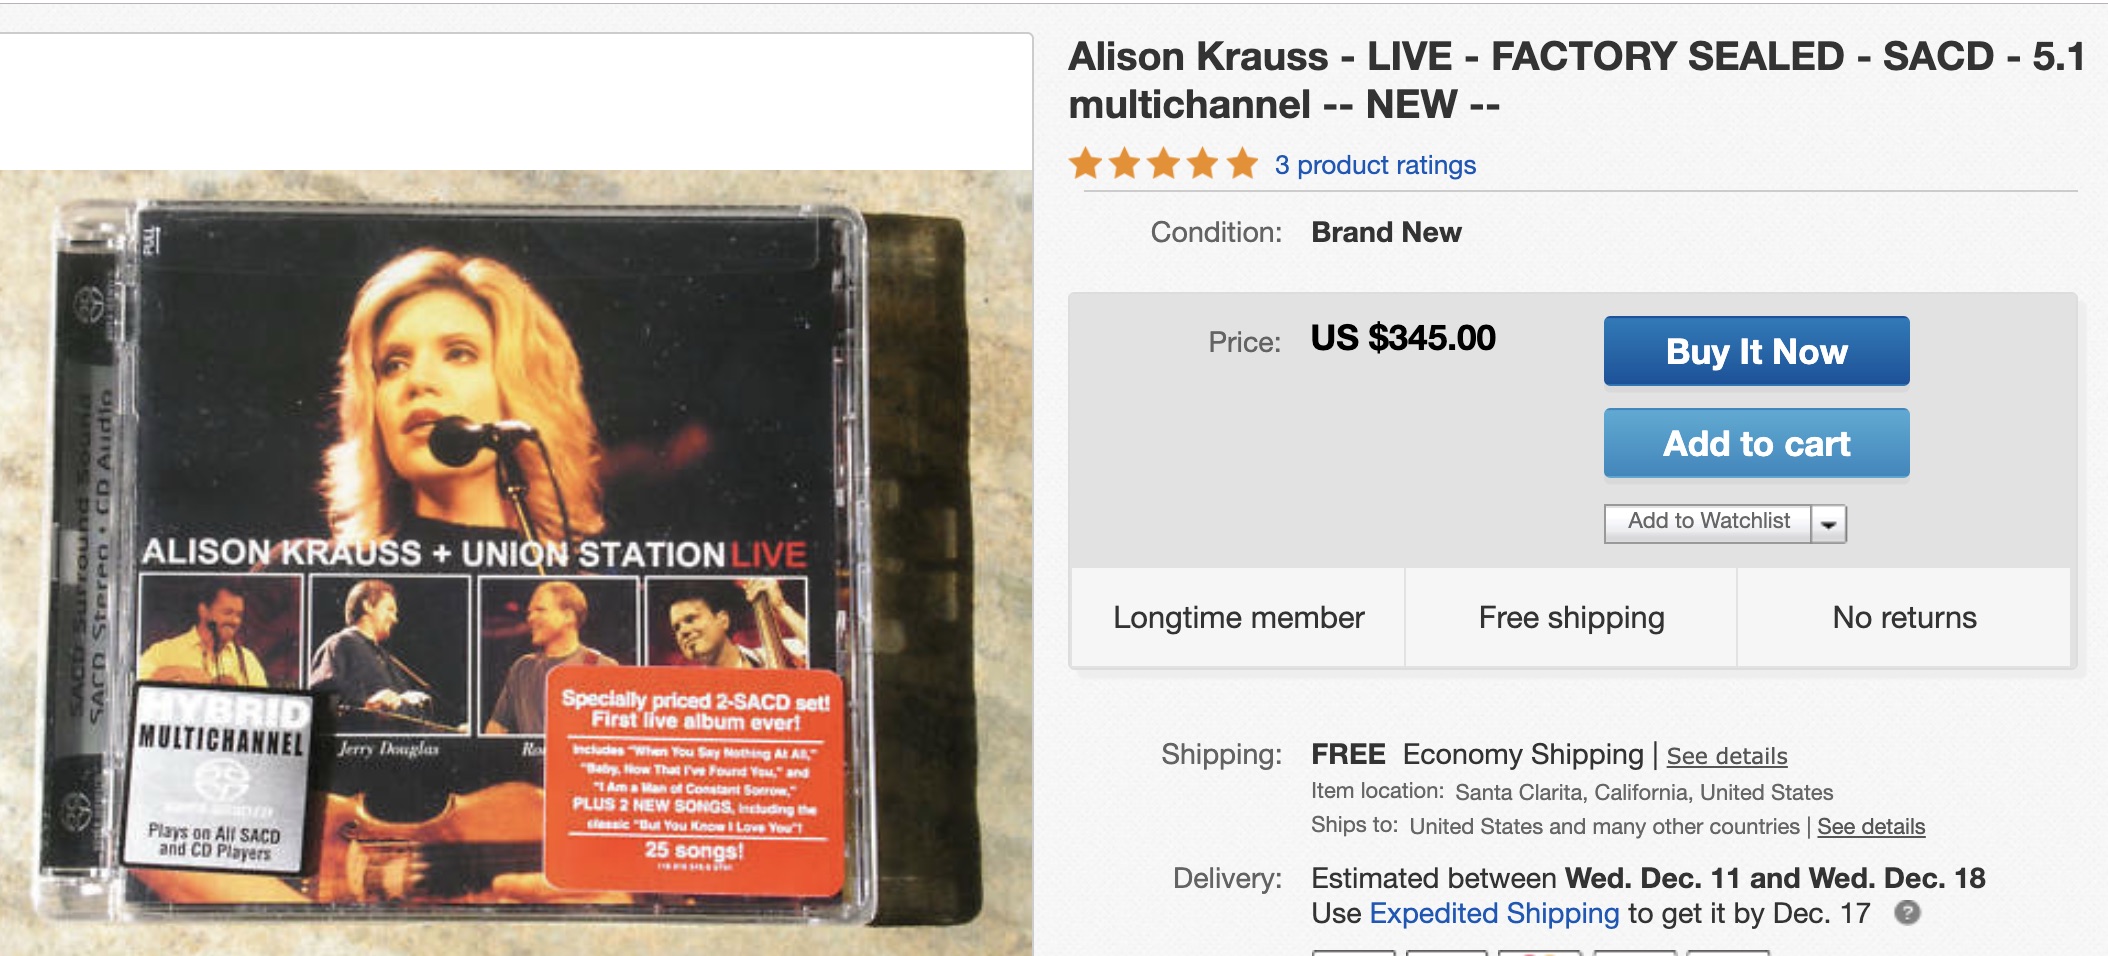 Alison Krauss Union Station Live Sacd Quadraphonicquad